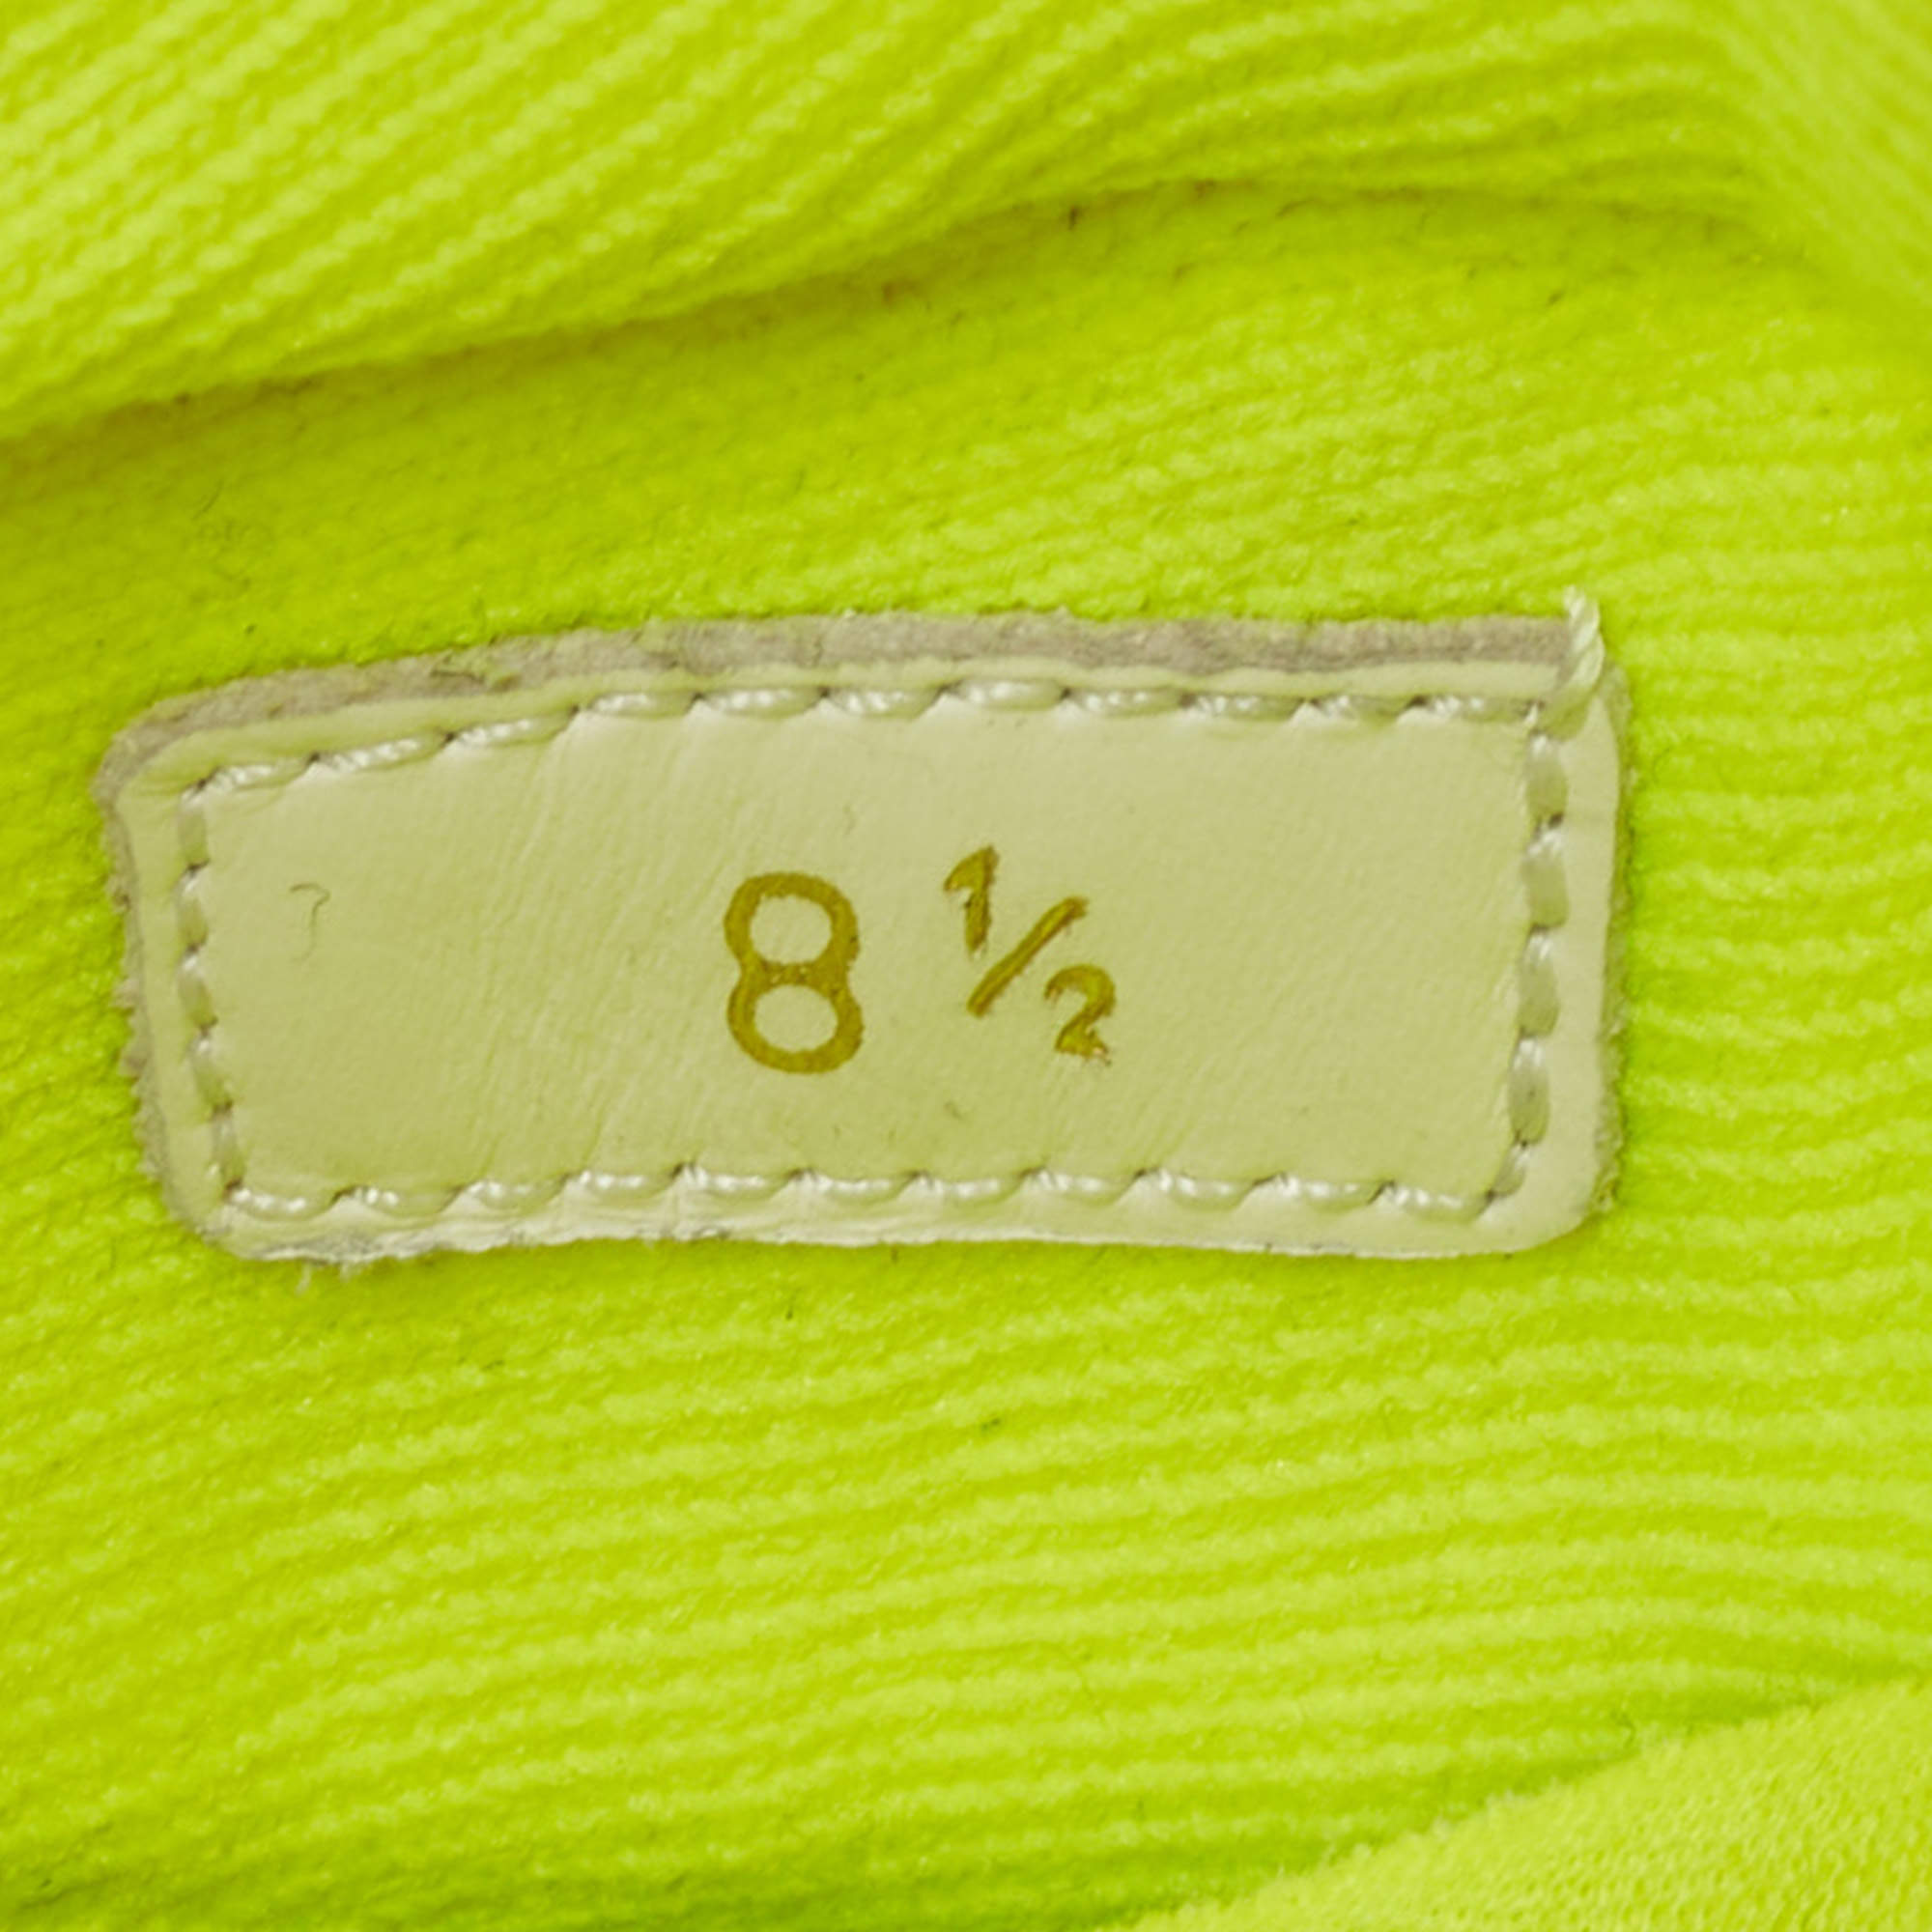 Louis Vuitton Neon Yellow Knit Fabric V.N.R Sneakers Size 42.5 Louis Vuitton